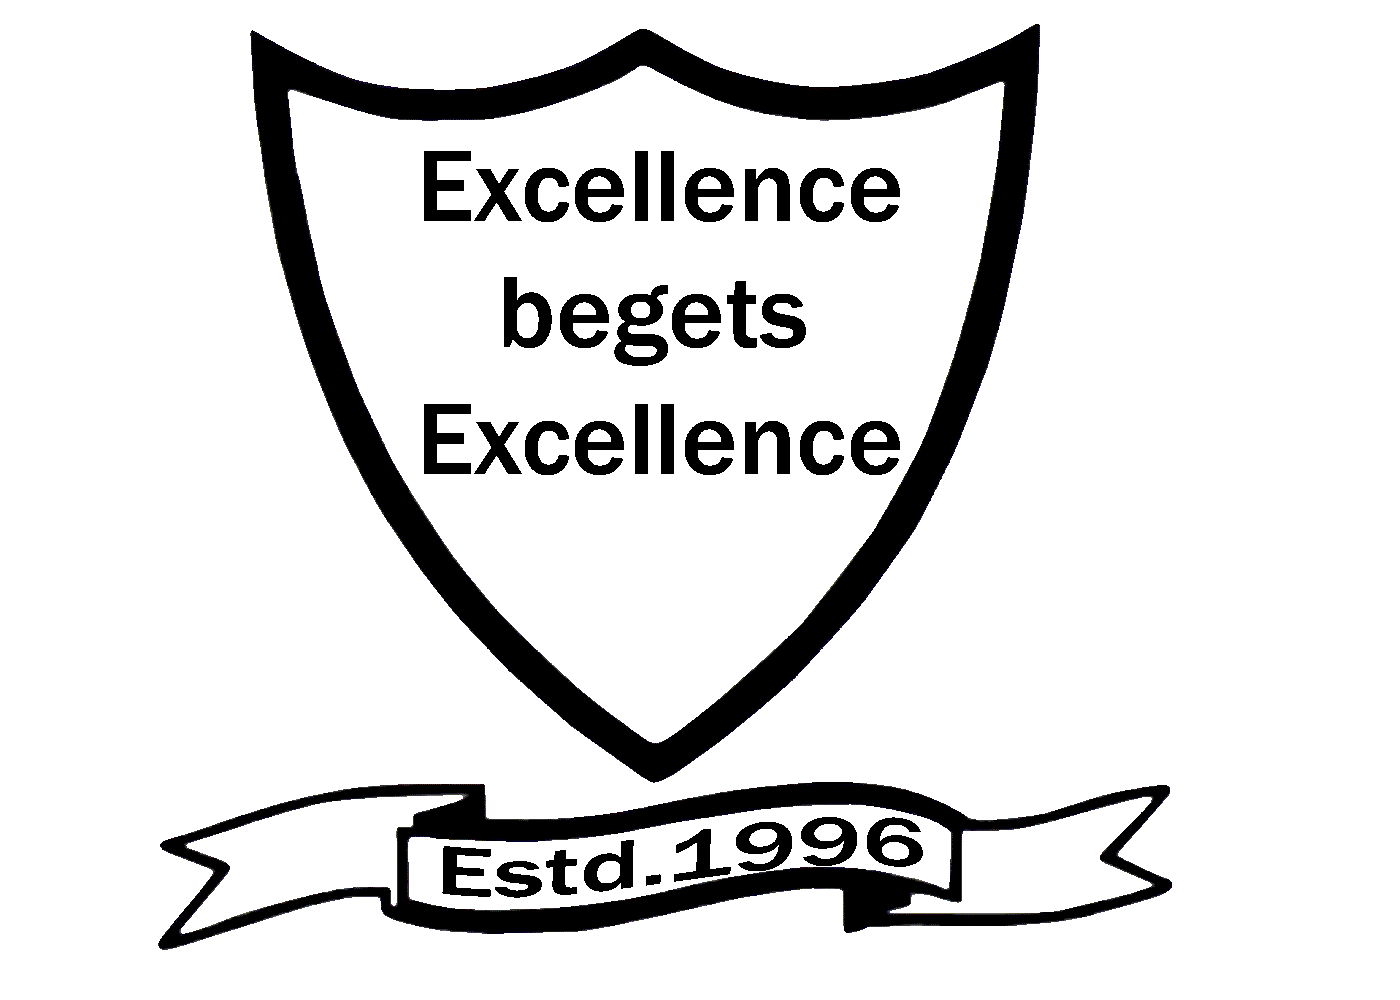 Shardein School Logo